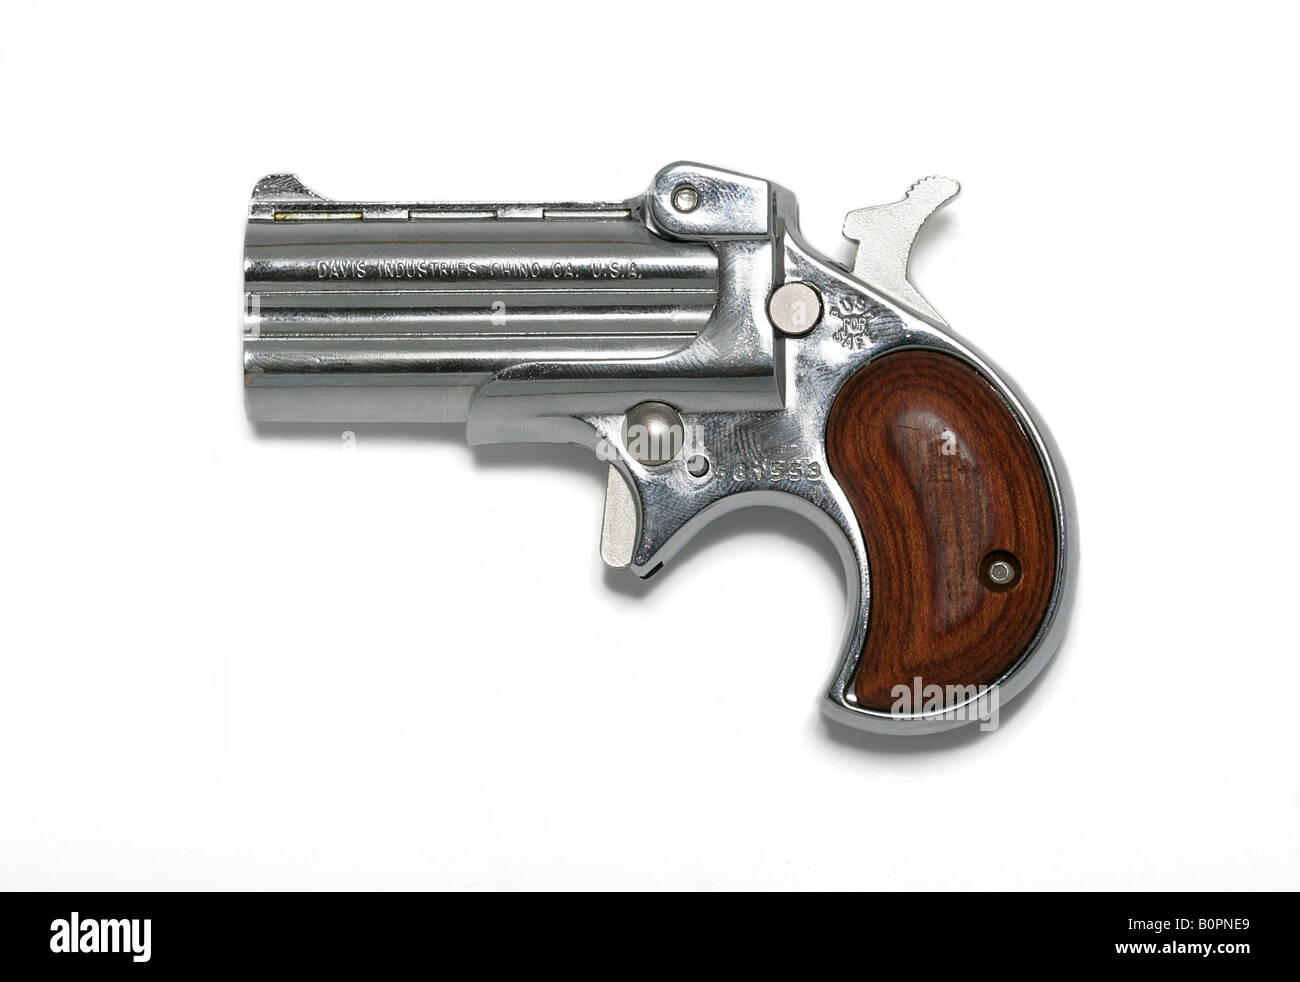 Derringer 7.65 handgun hand gun pistol Stock Photo